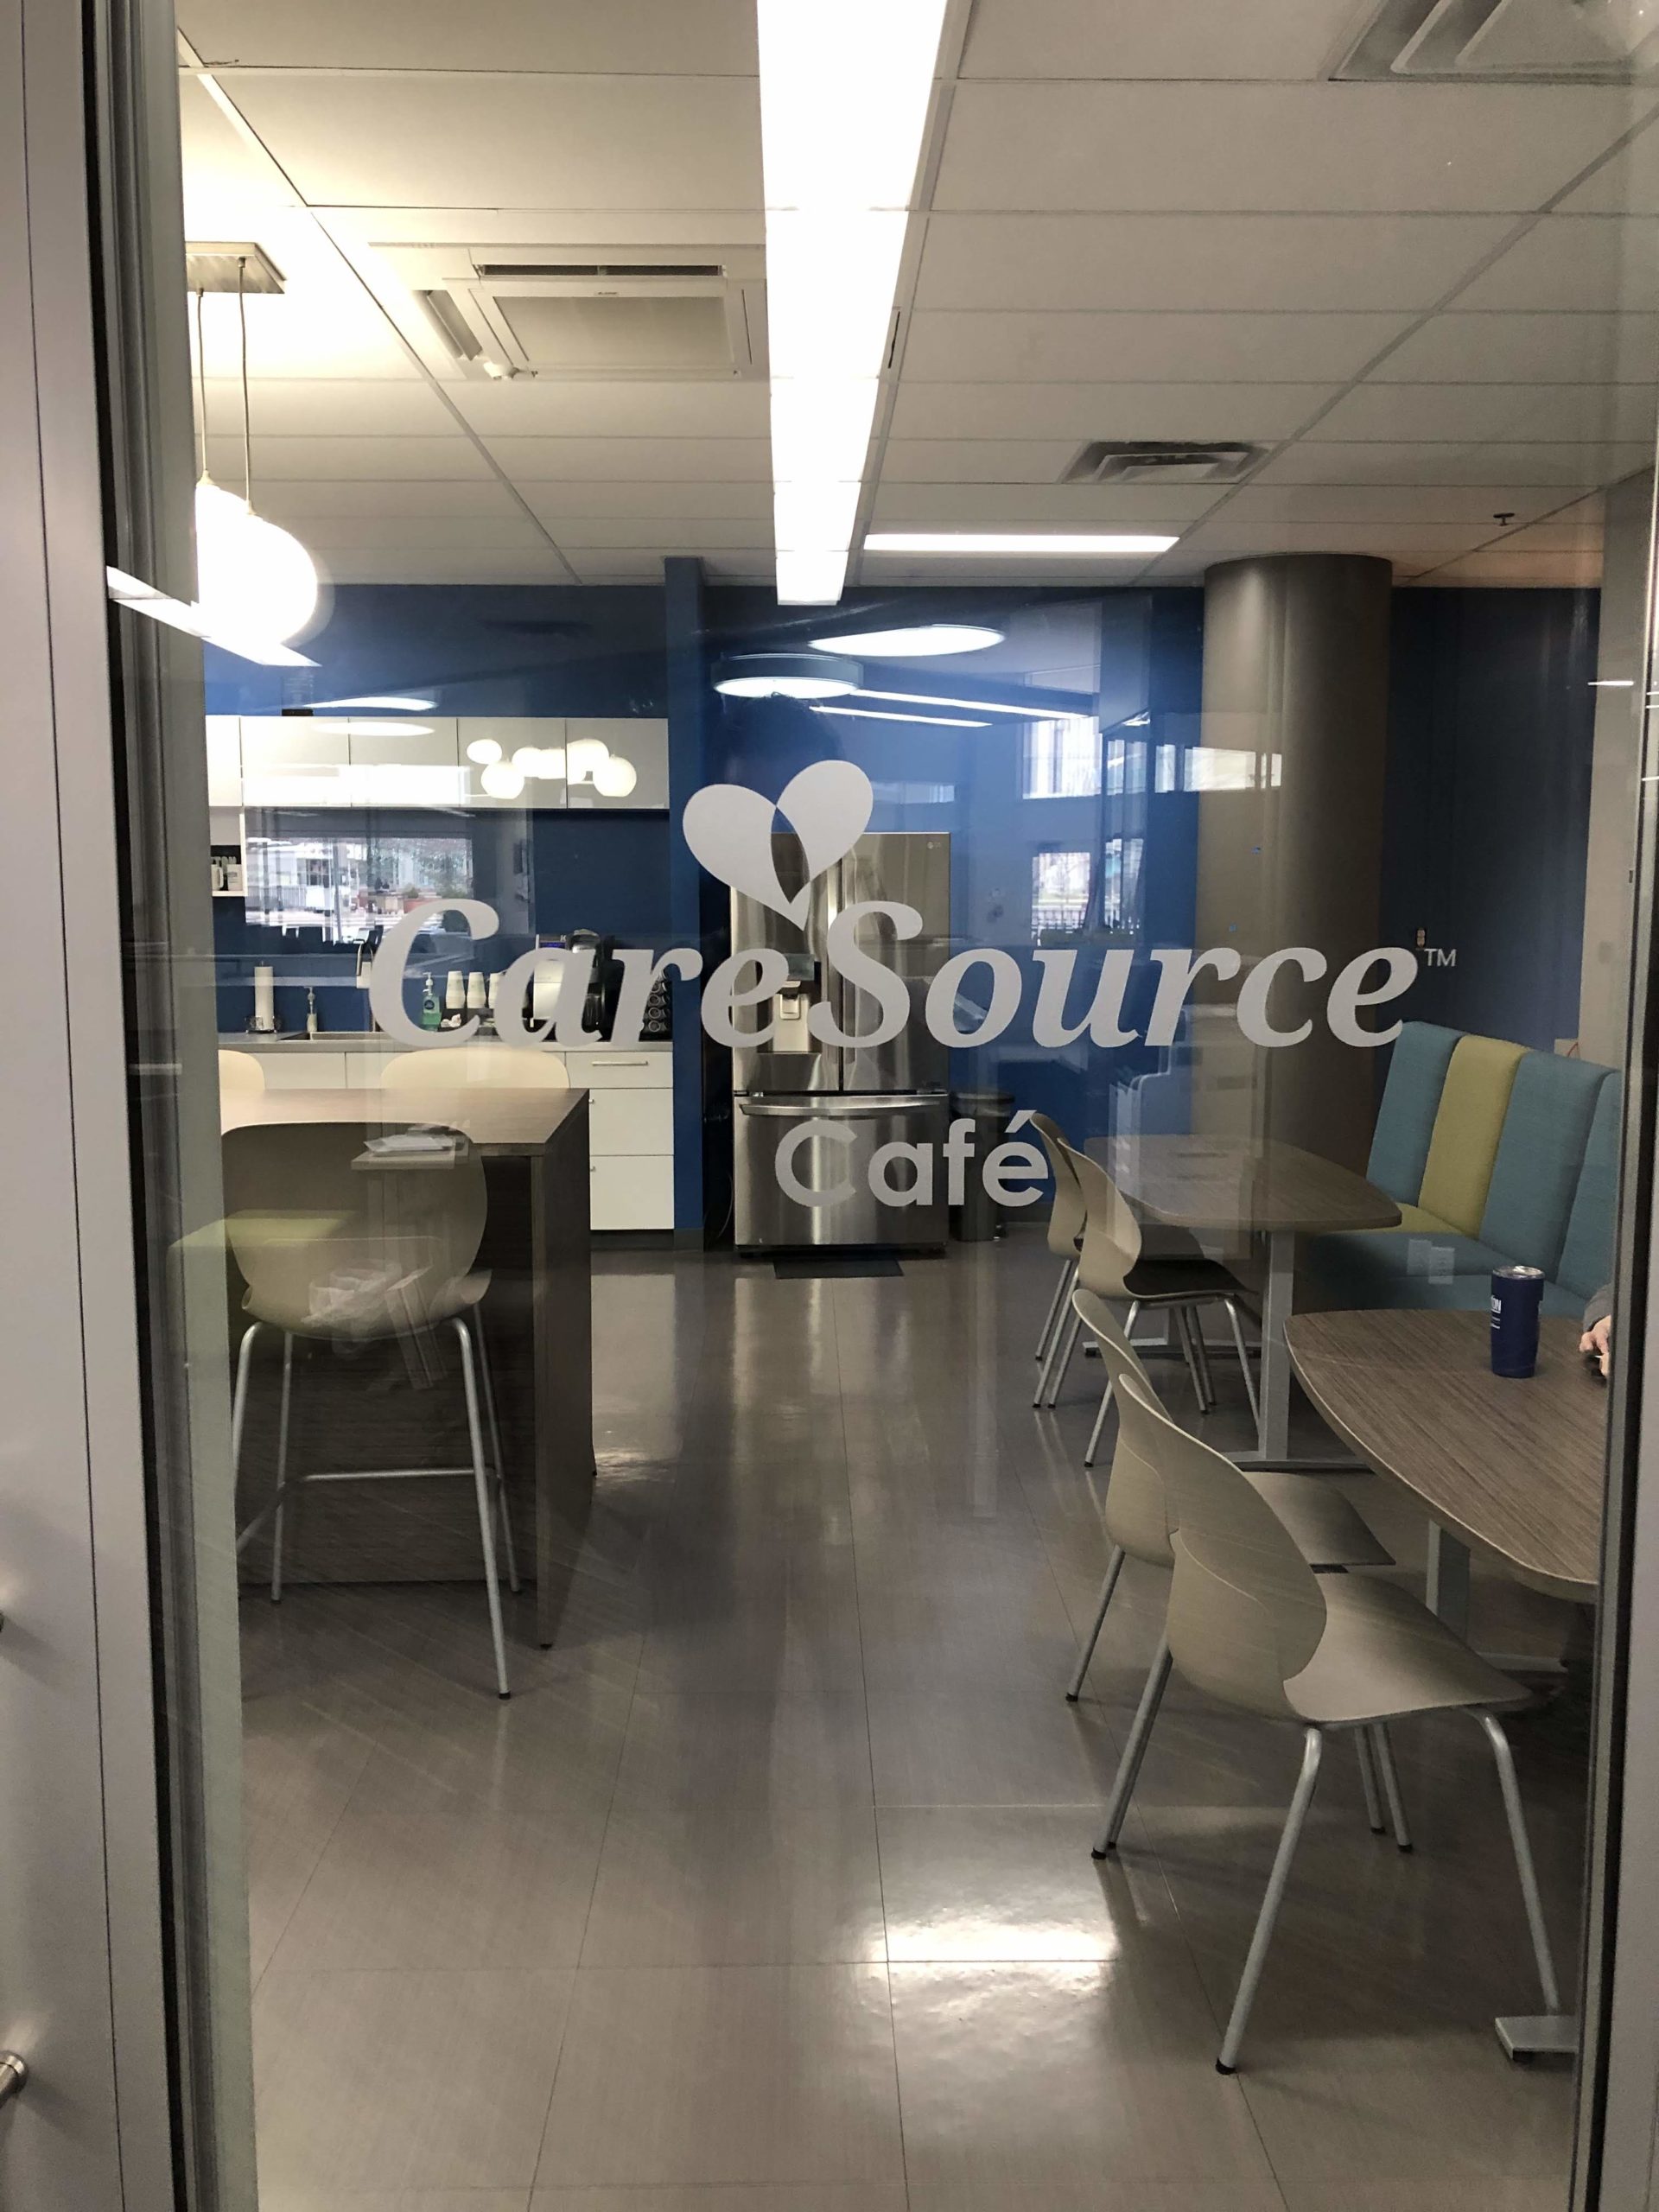 CareSource Cafe Window Graphic